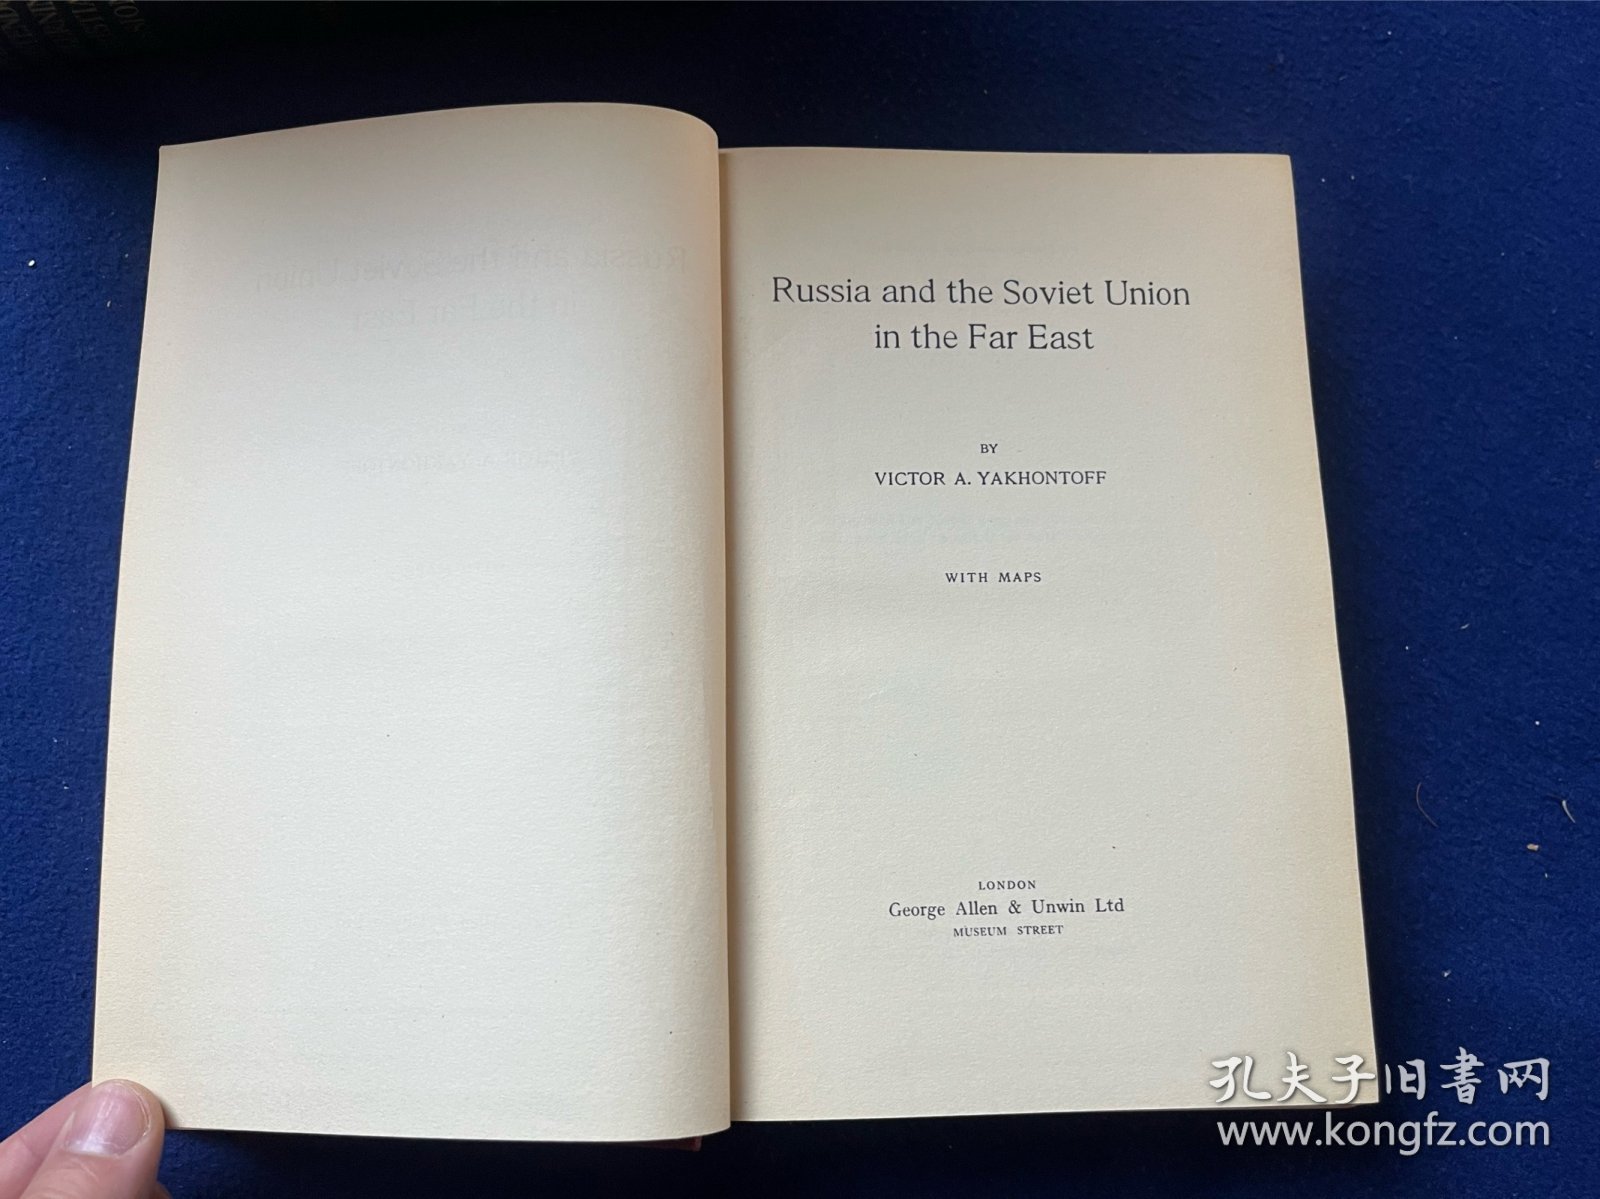 1932年英文版《Russia and the Soviet Union in the Far East》俄国与苏维埃在远东（中国）